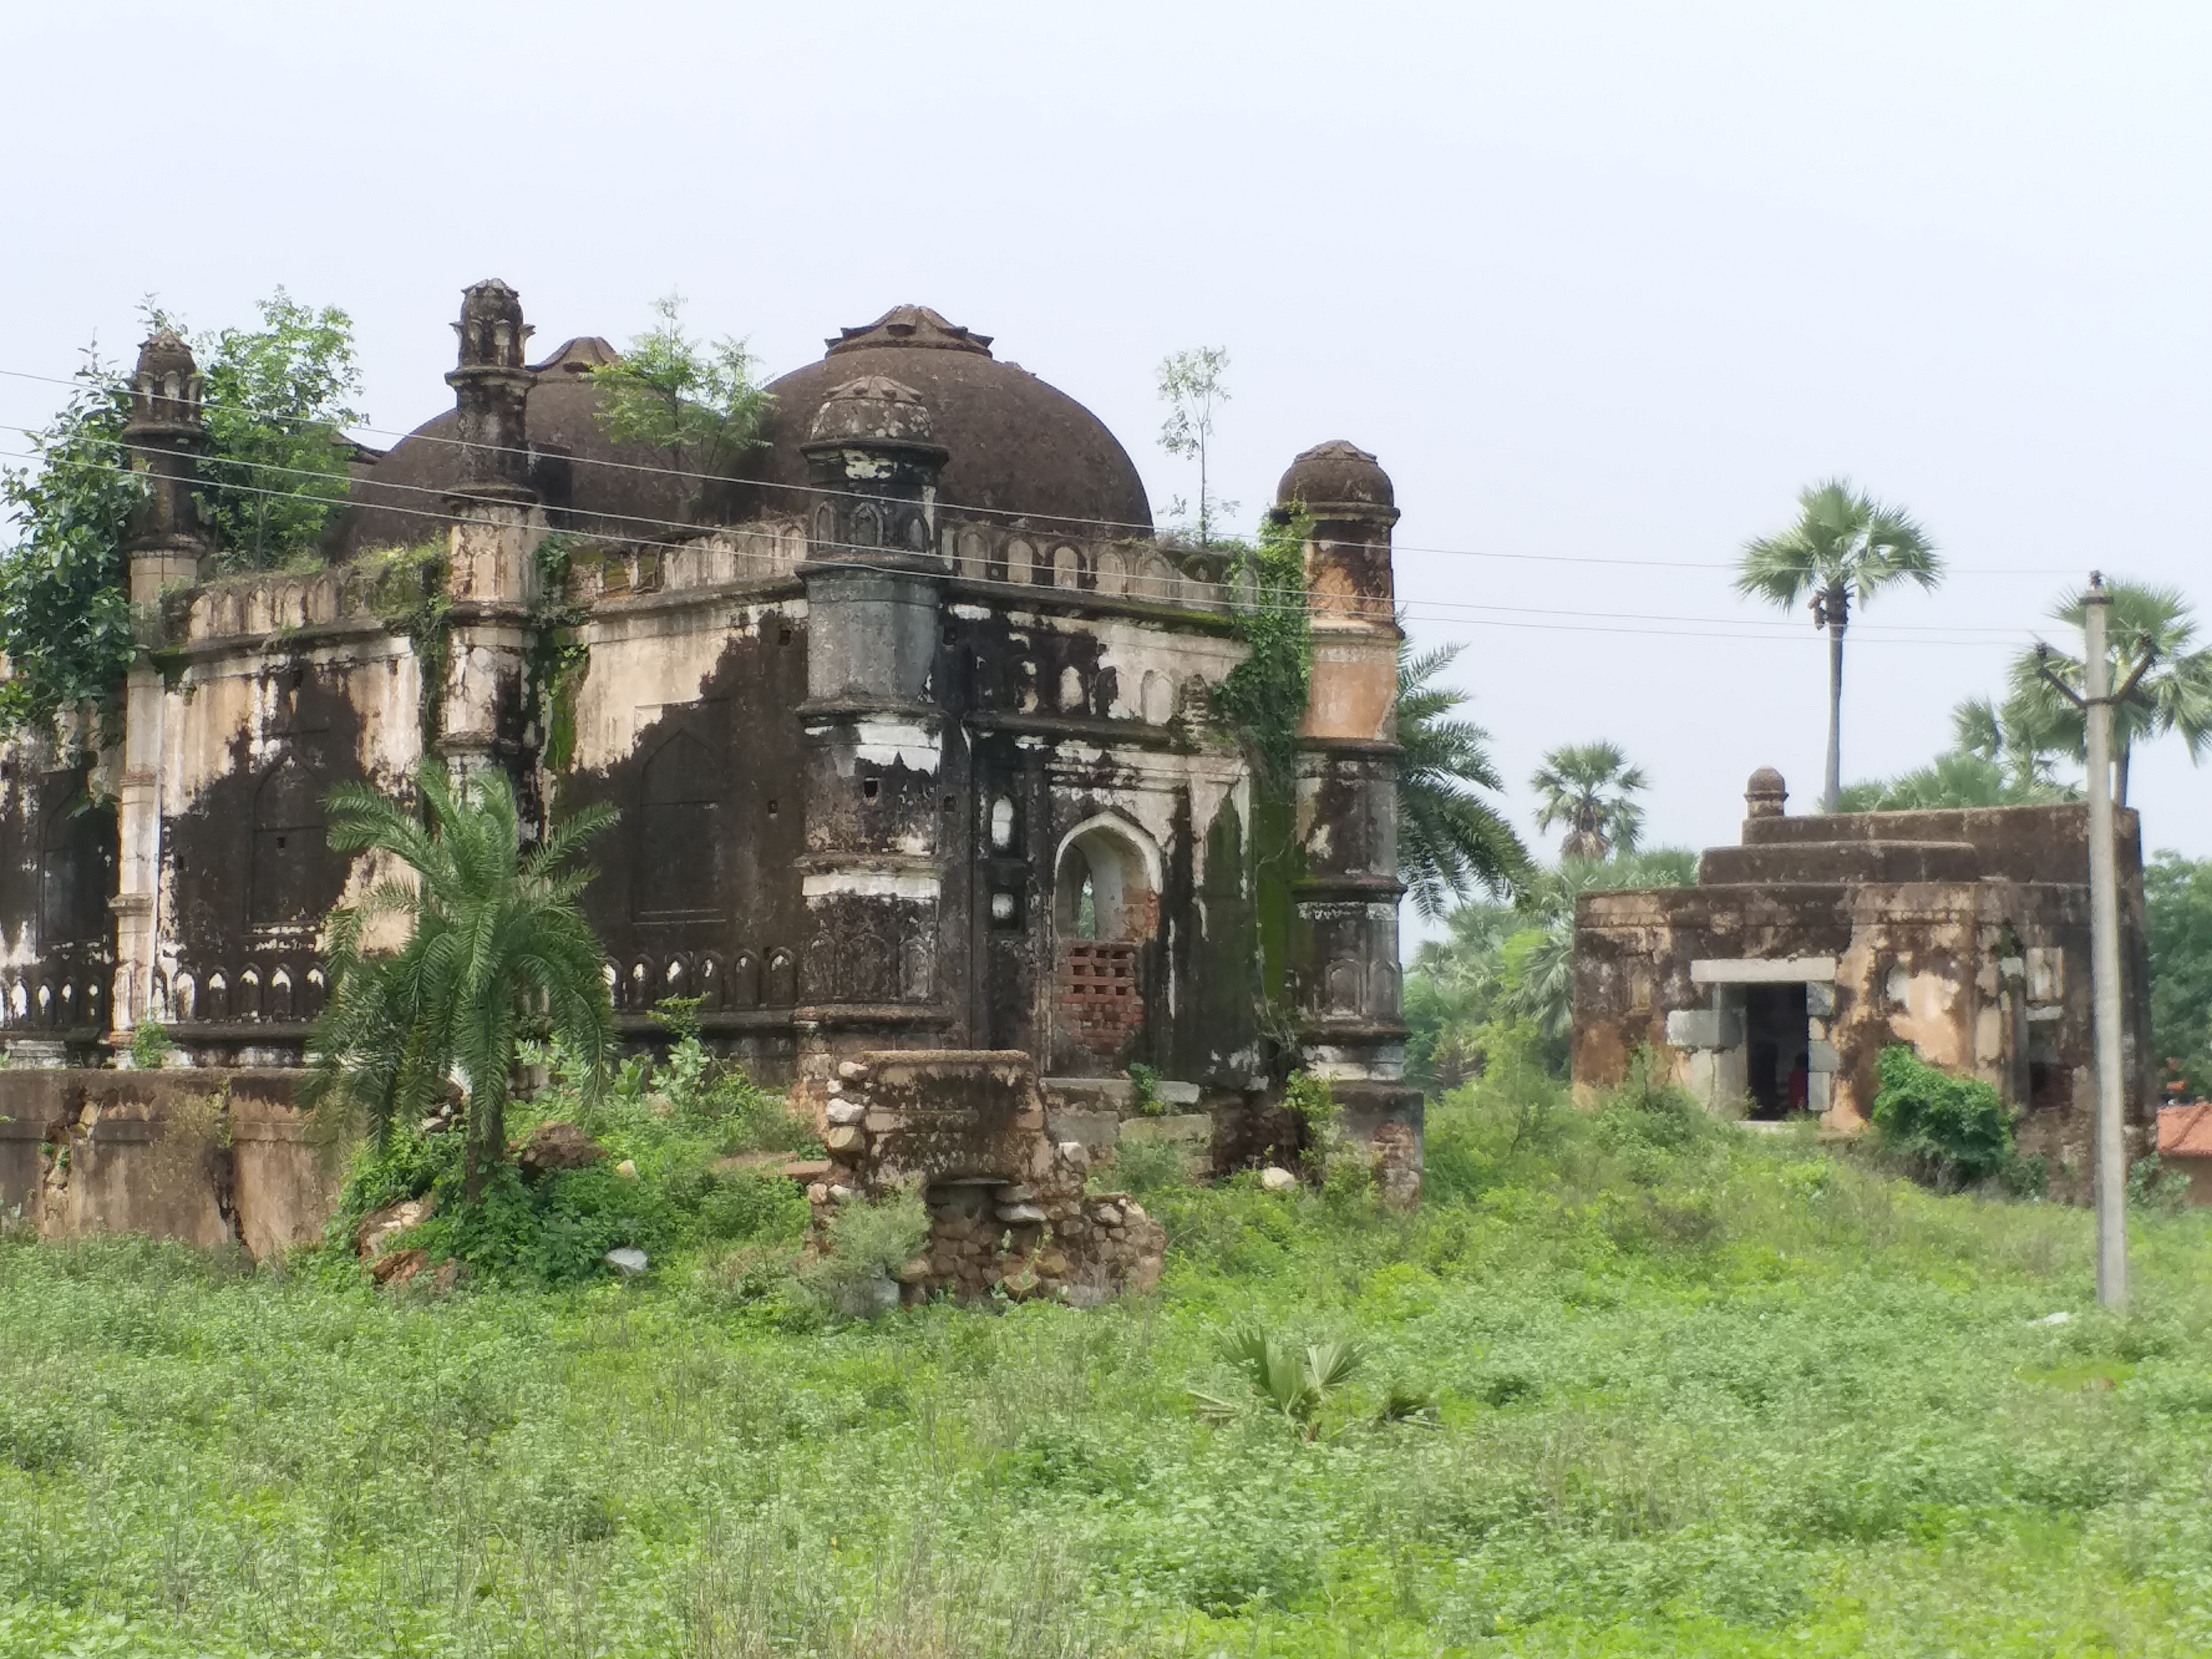 gaya: historical mosque in poor condition